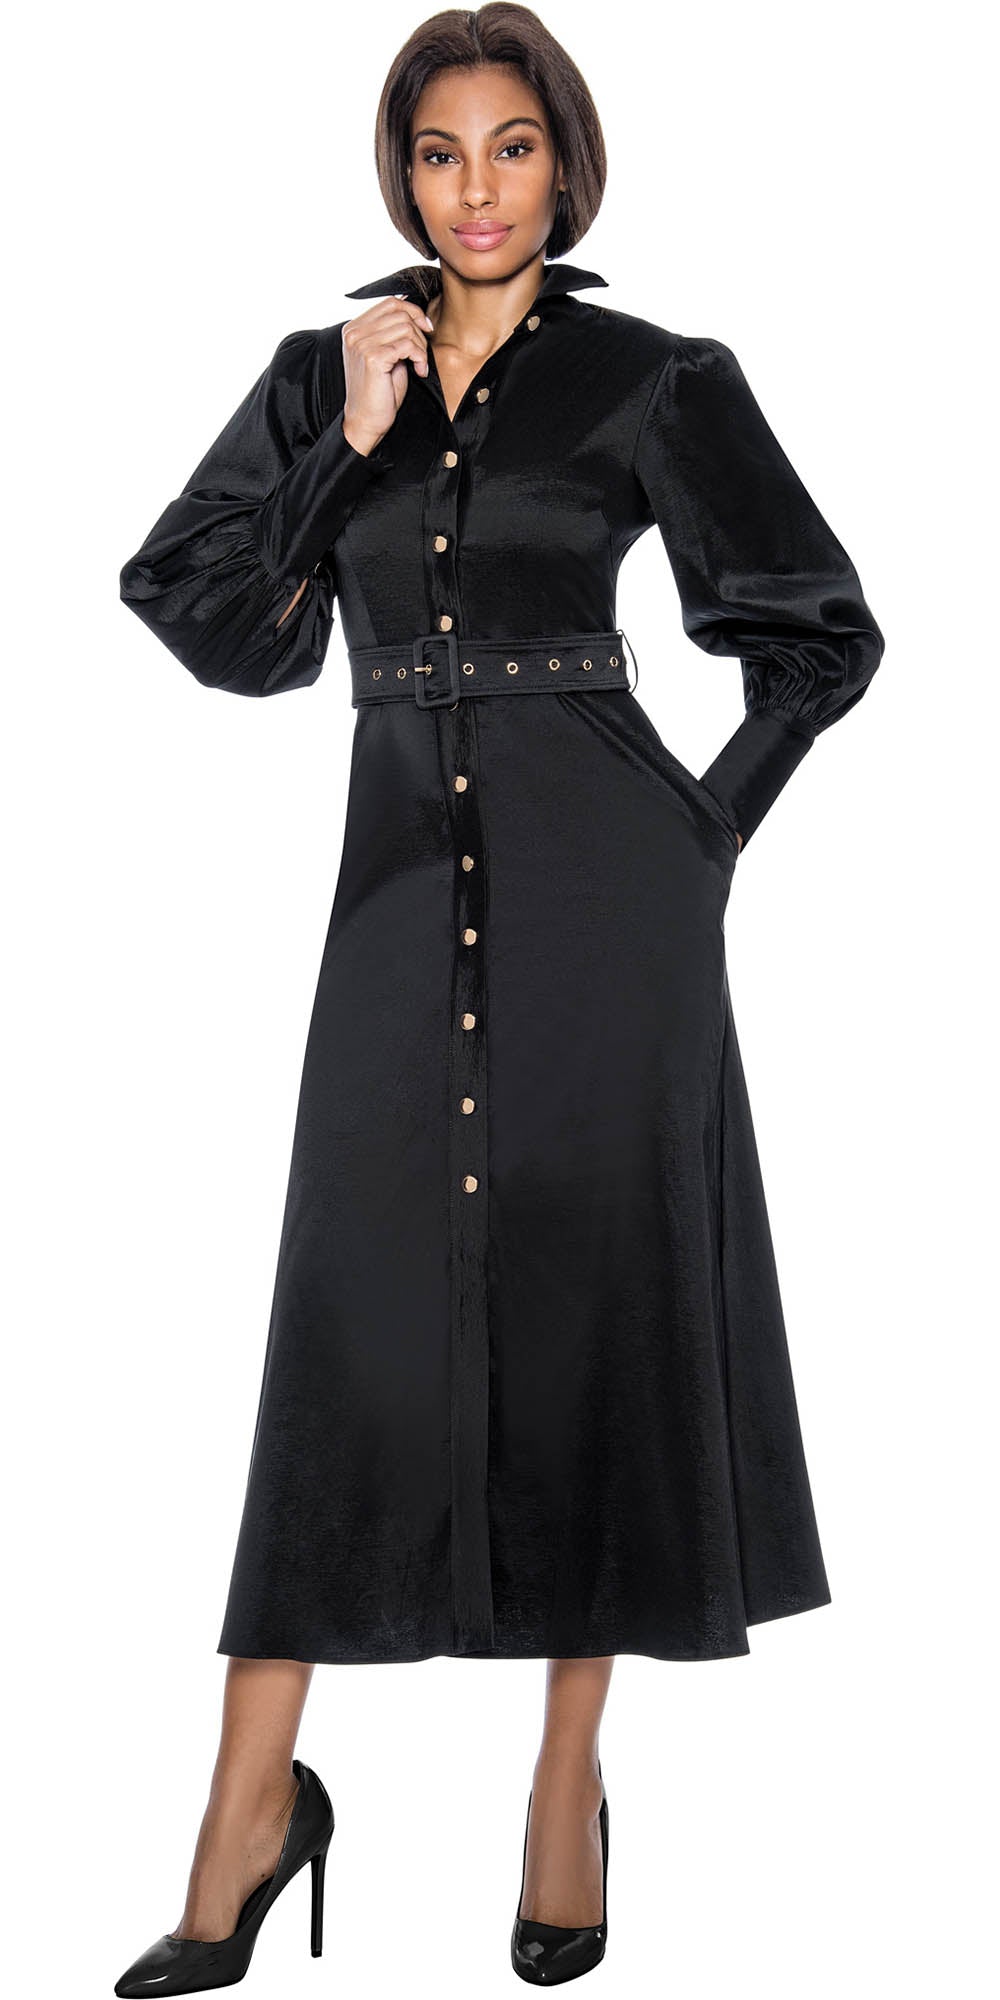 Terramina 7055 - Black - Belted Dress with Lantern Sleeves